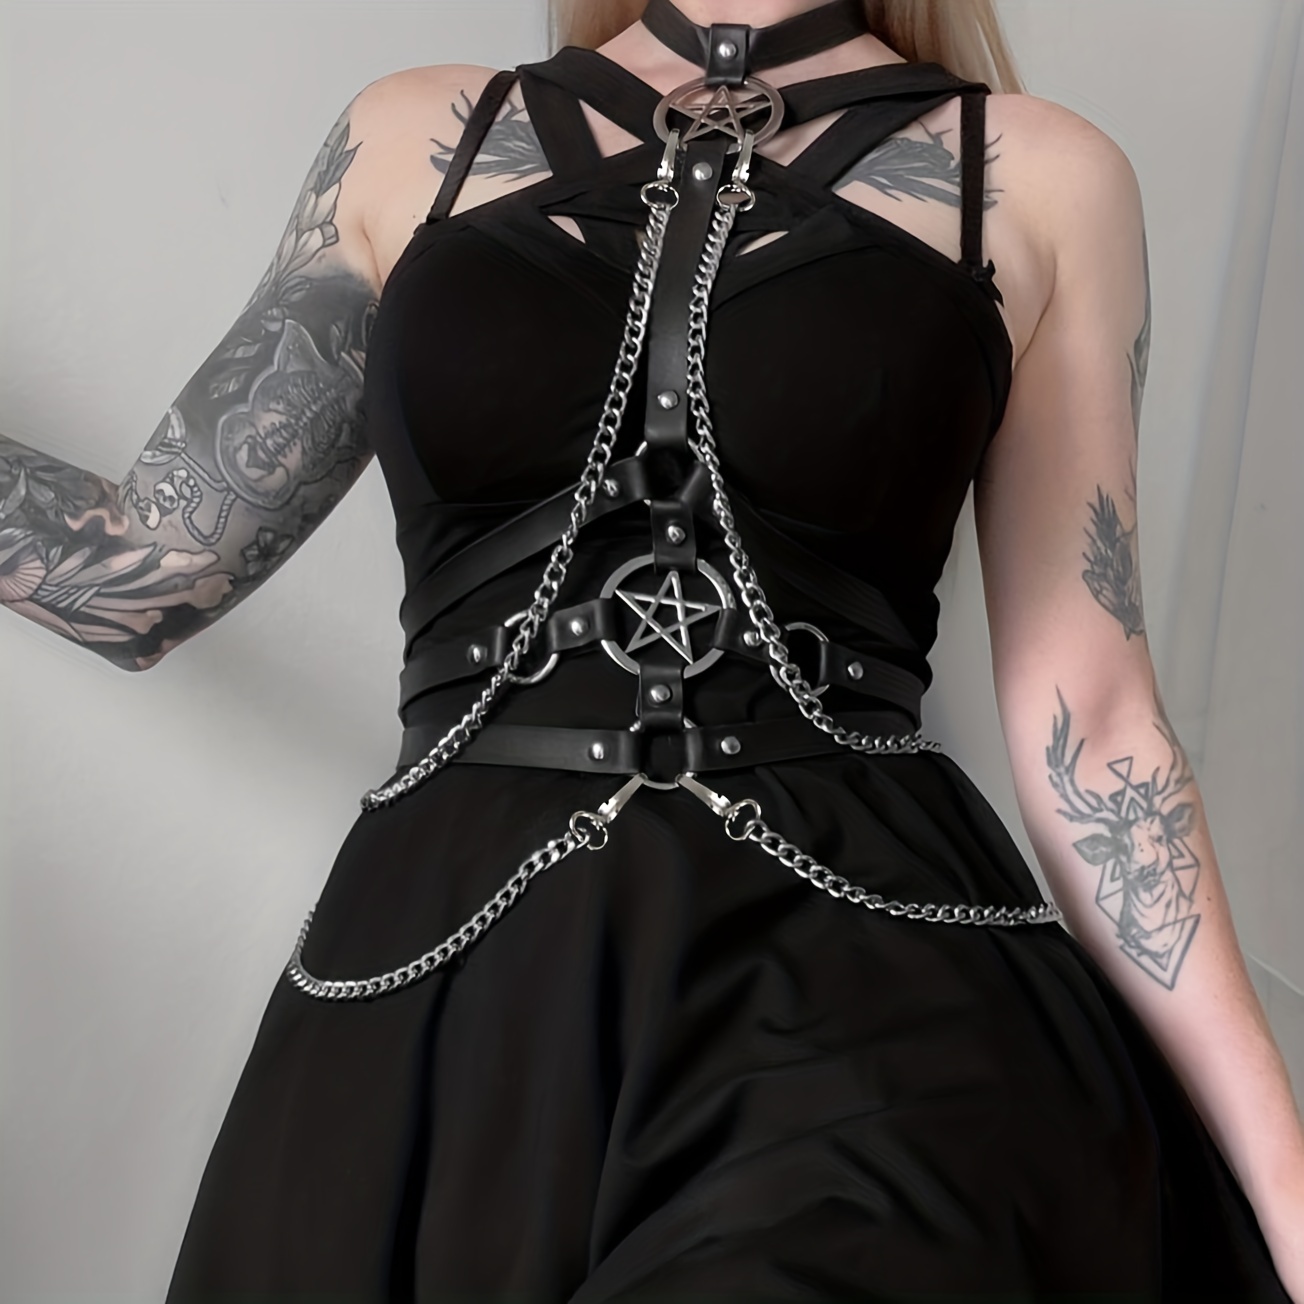 Bodiy Punk Waist Harness Belt Fashion Body Chain Black Goth Rave Adjustable  Body Jewelry for Women and Girls